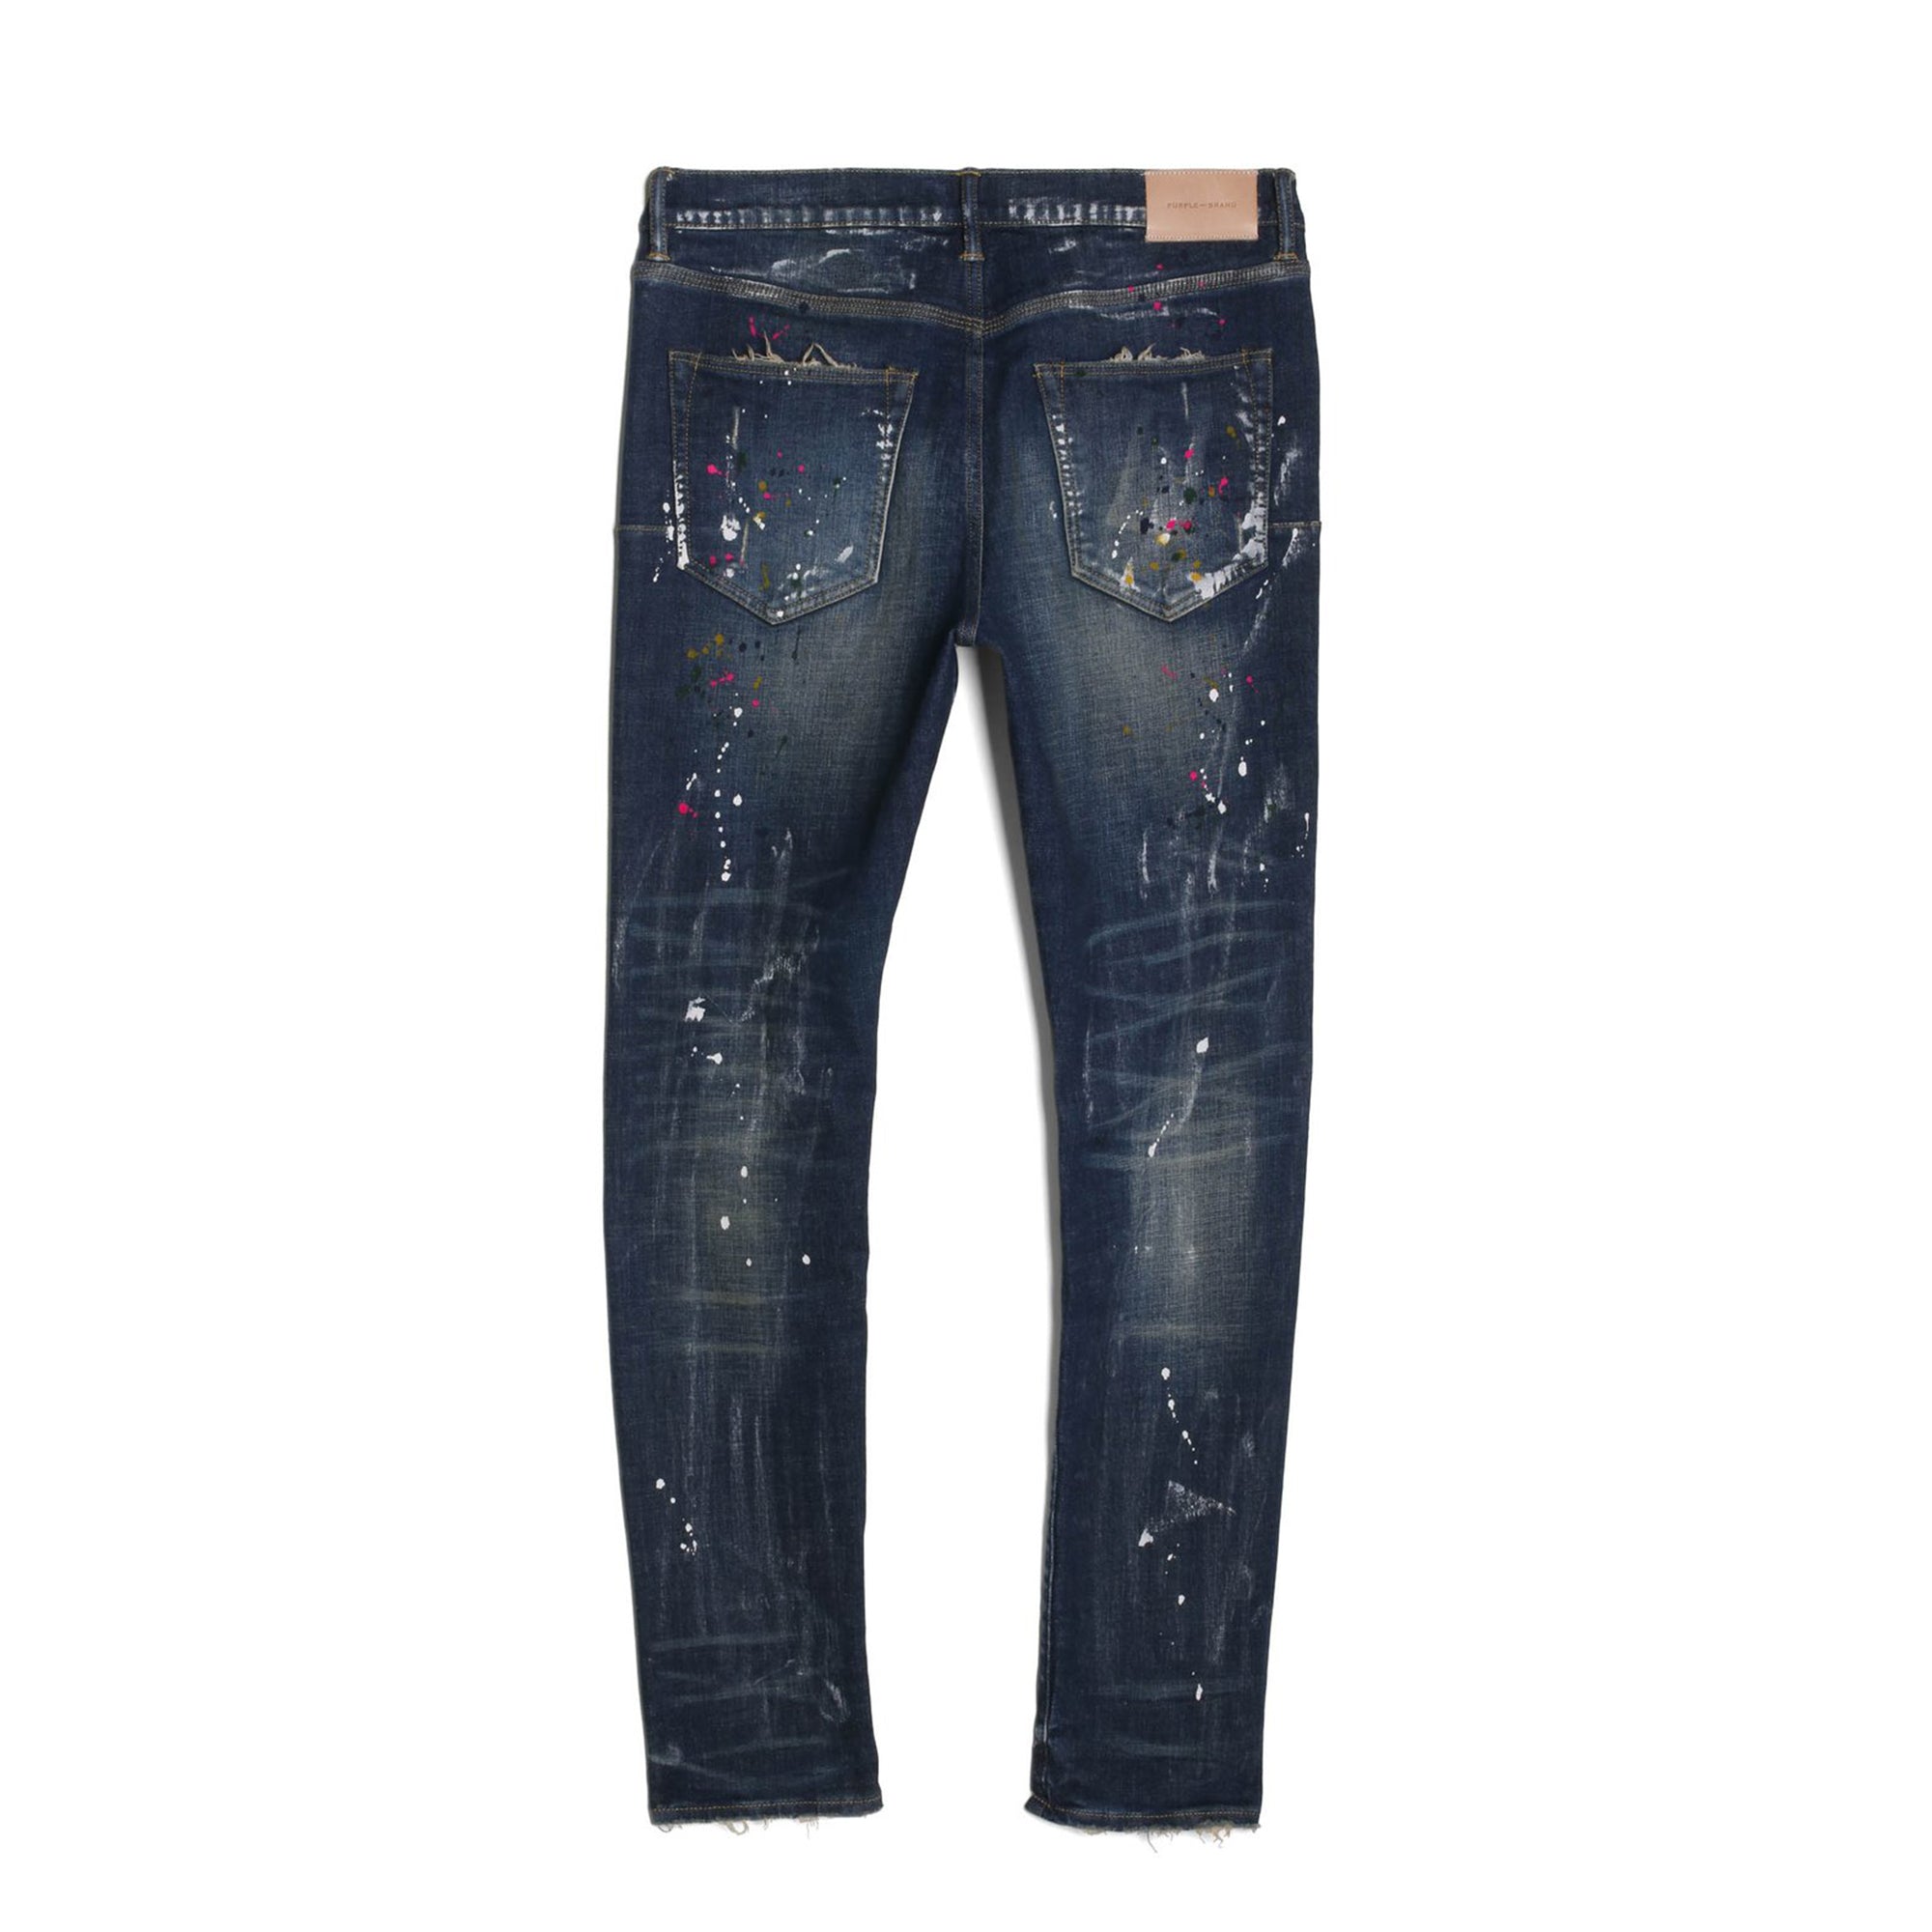 NWT PURPLE BRAND Indigo Oil Repair Skinny Jeans Size 34/44 $275 